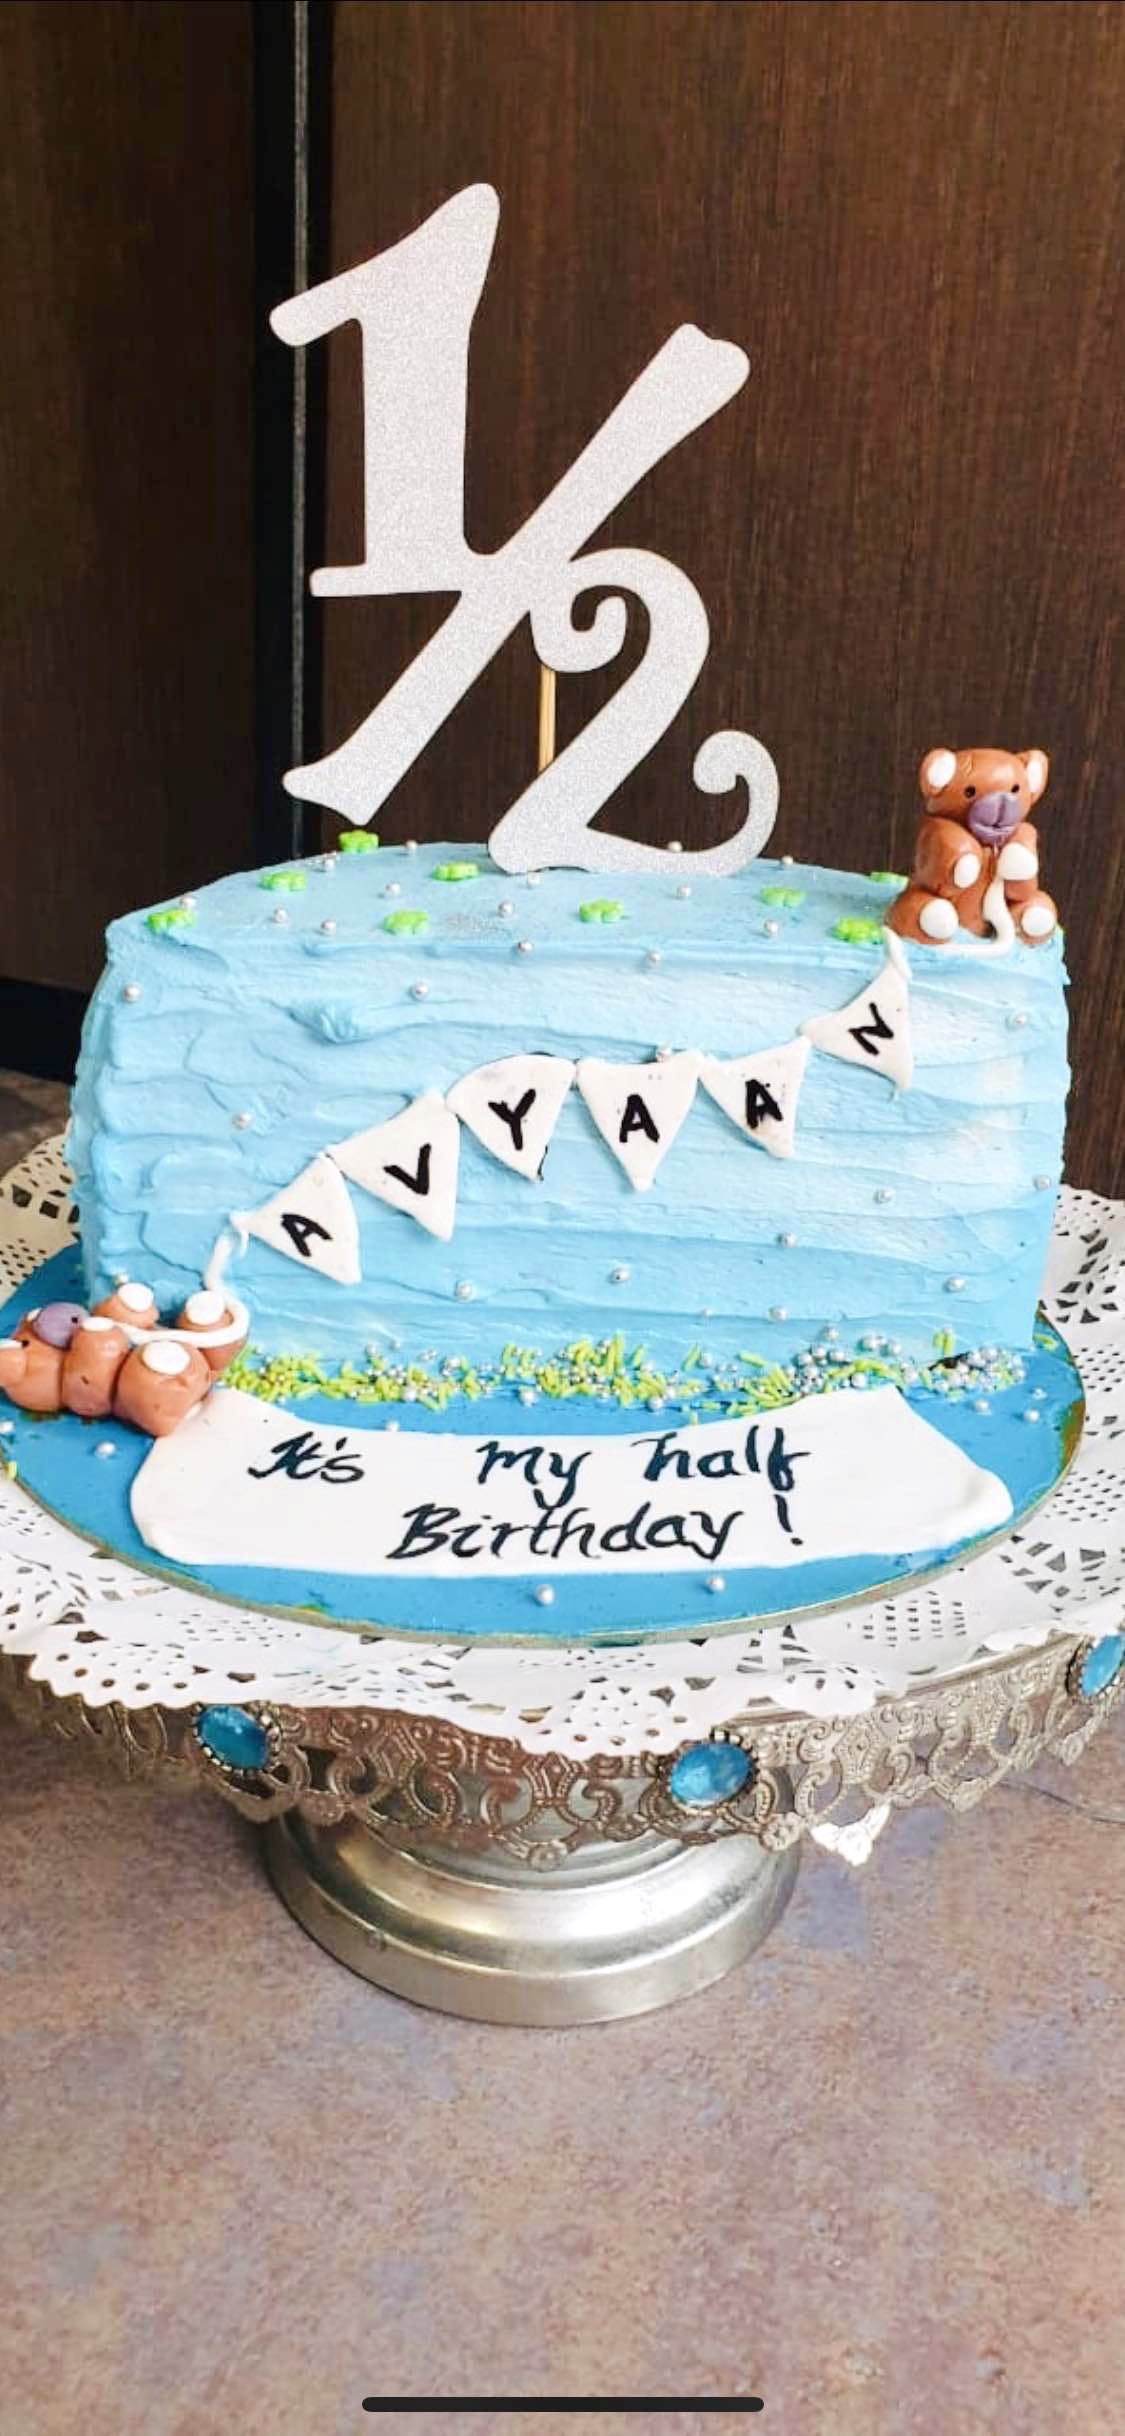 Cake,Buttercream,Sugar paste,Cake decorating,Fondant,Icing,Pasteles,Birthday cake,Dessert,Baked goods